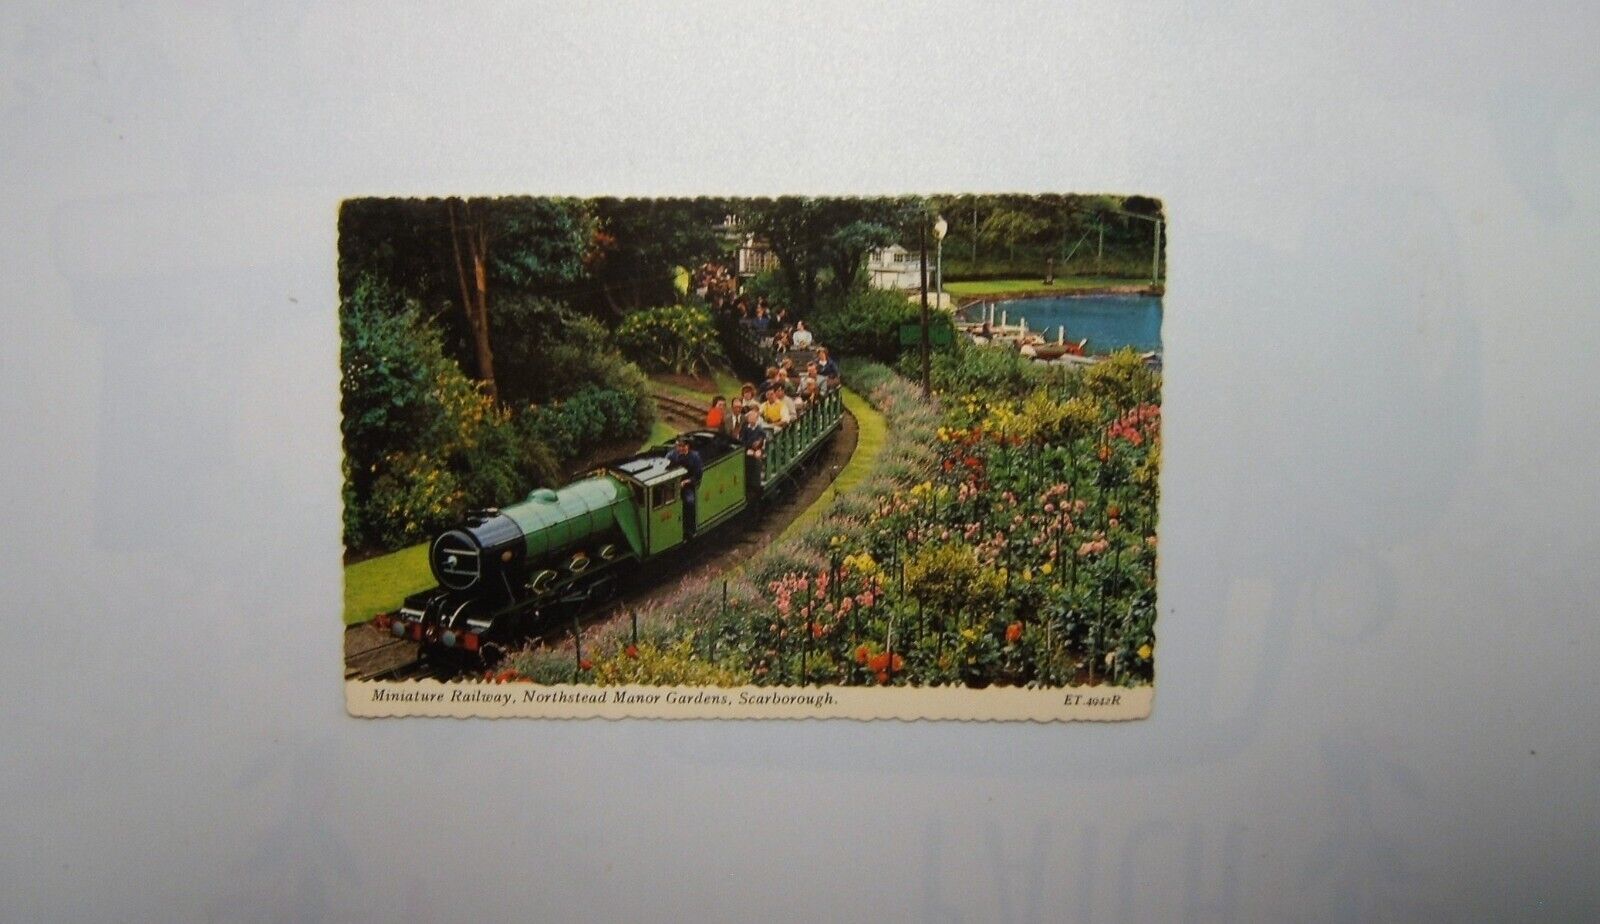 Picture Postcard Miniature Railway Northstead Manor GardensScarborough A-8